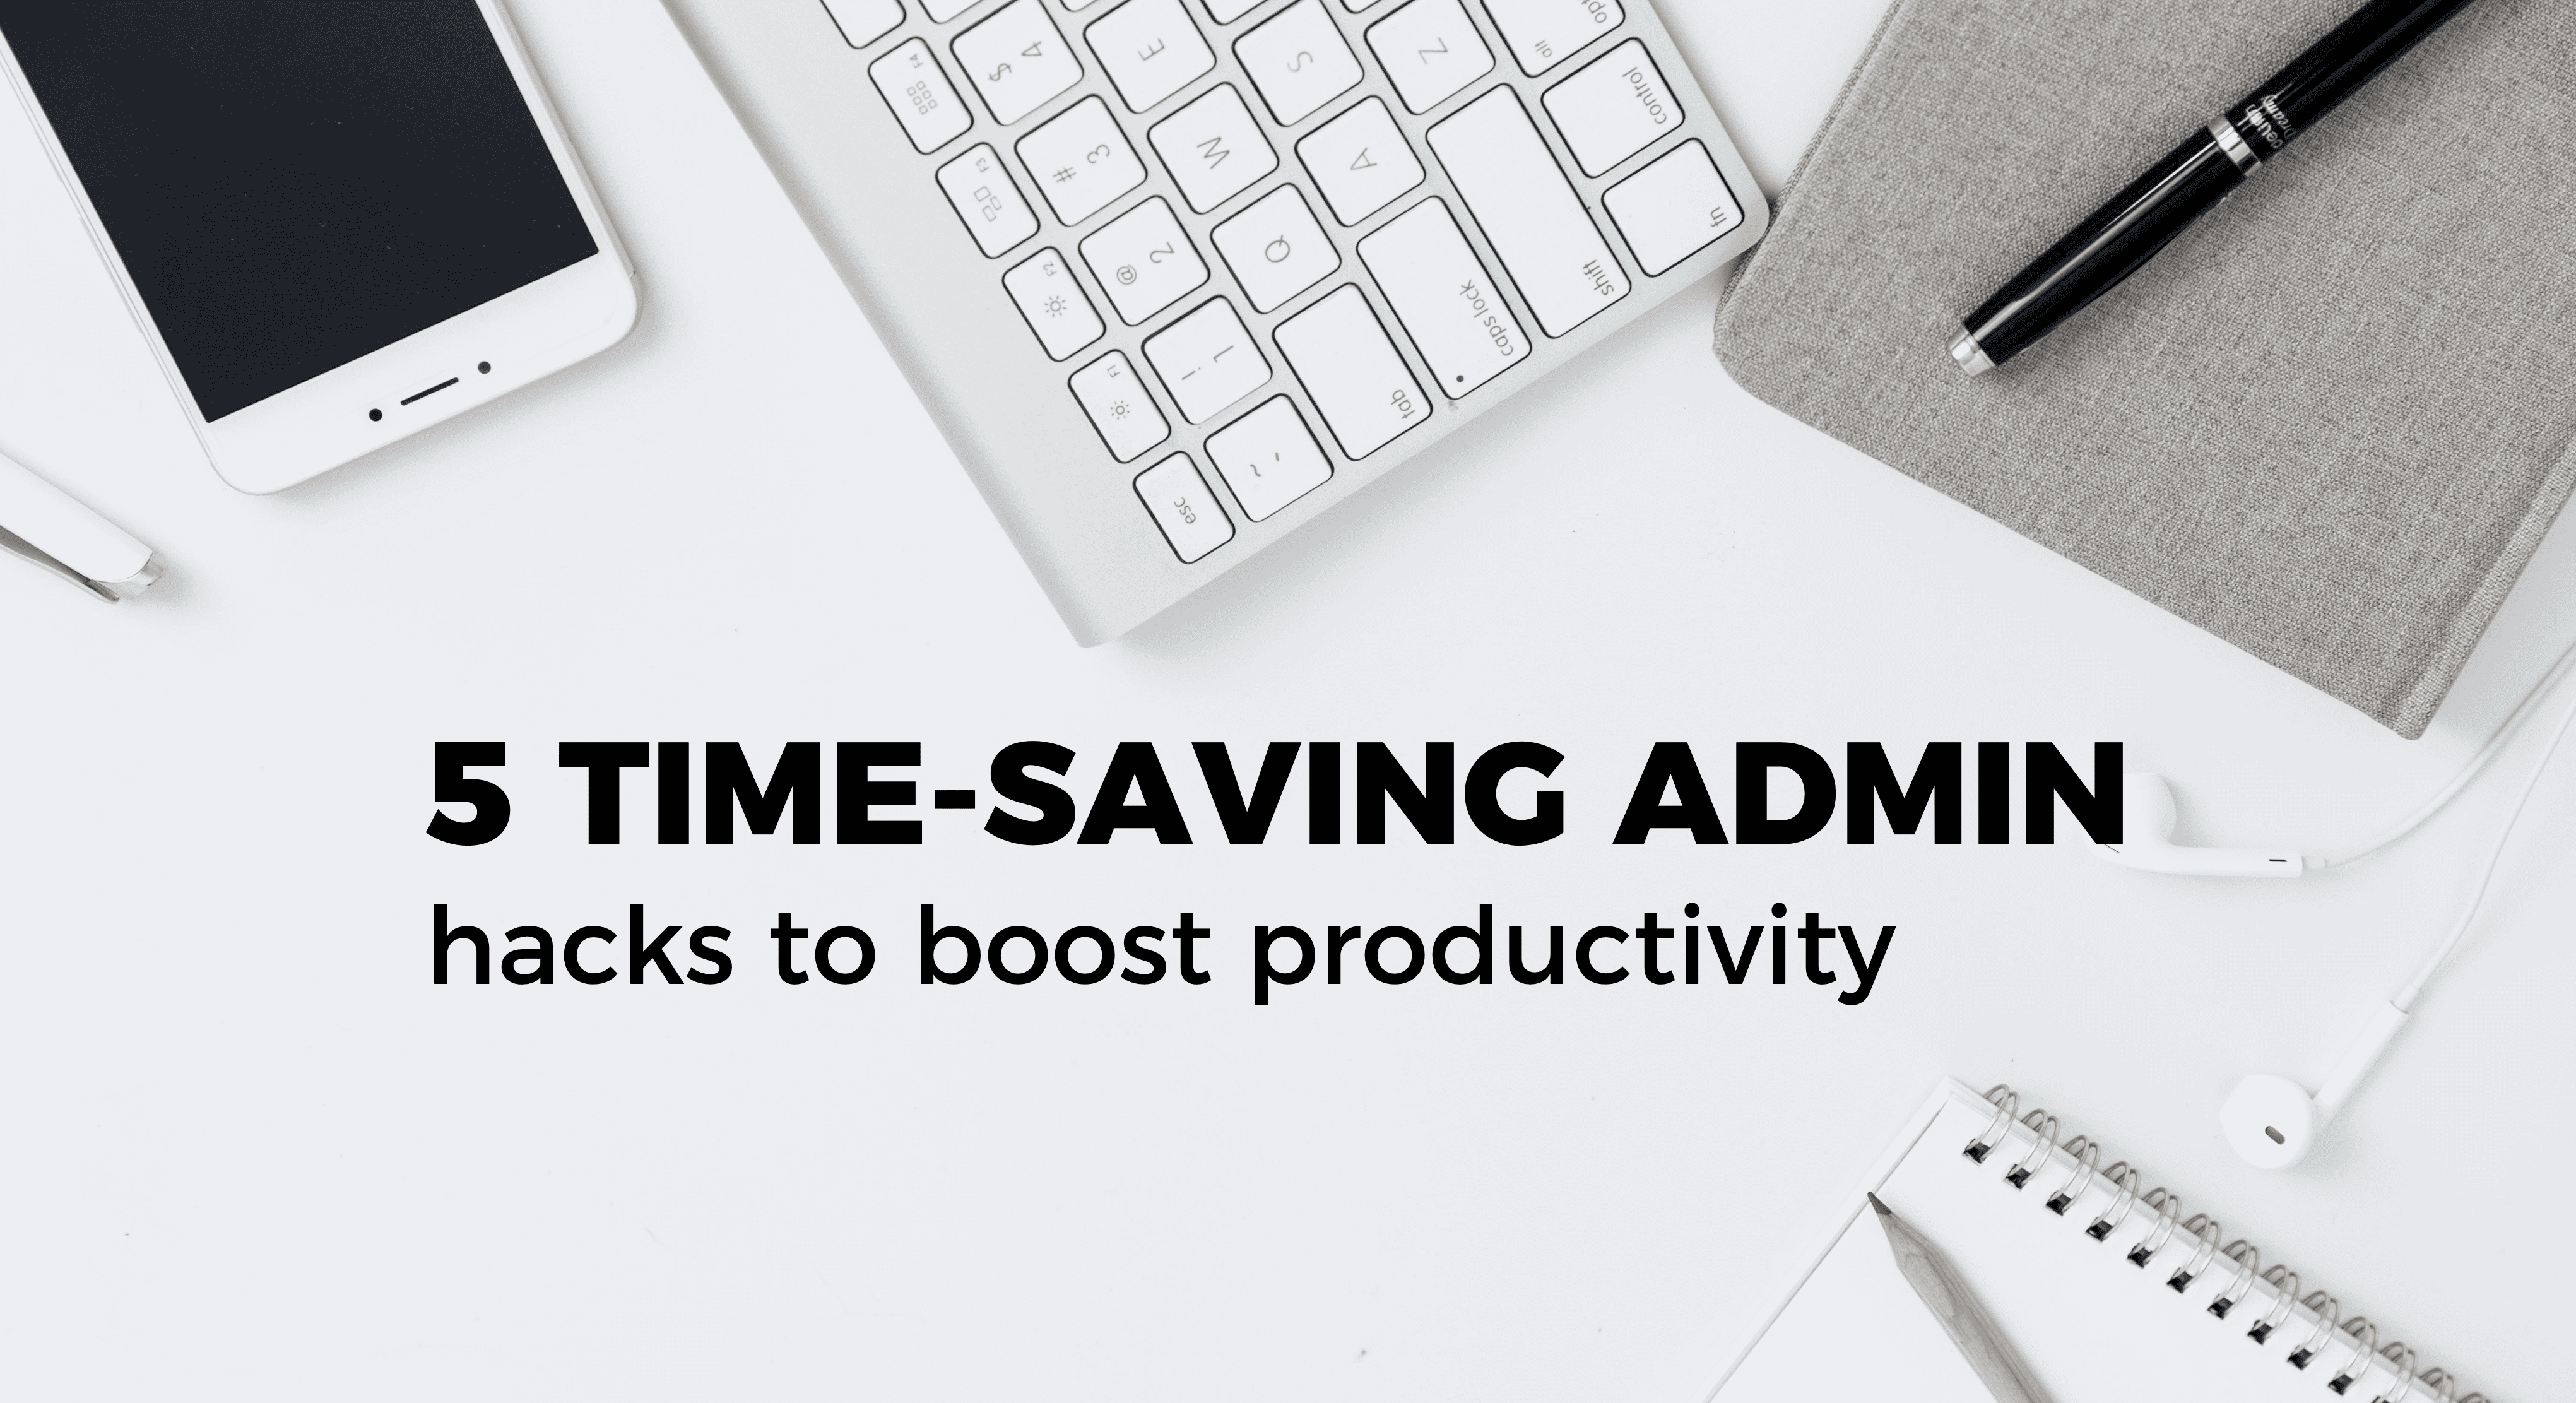 5 Time-Saving Admin hacks to boost productivity